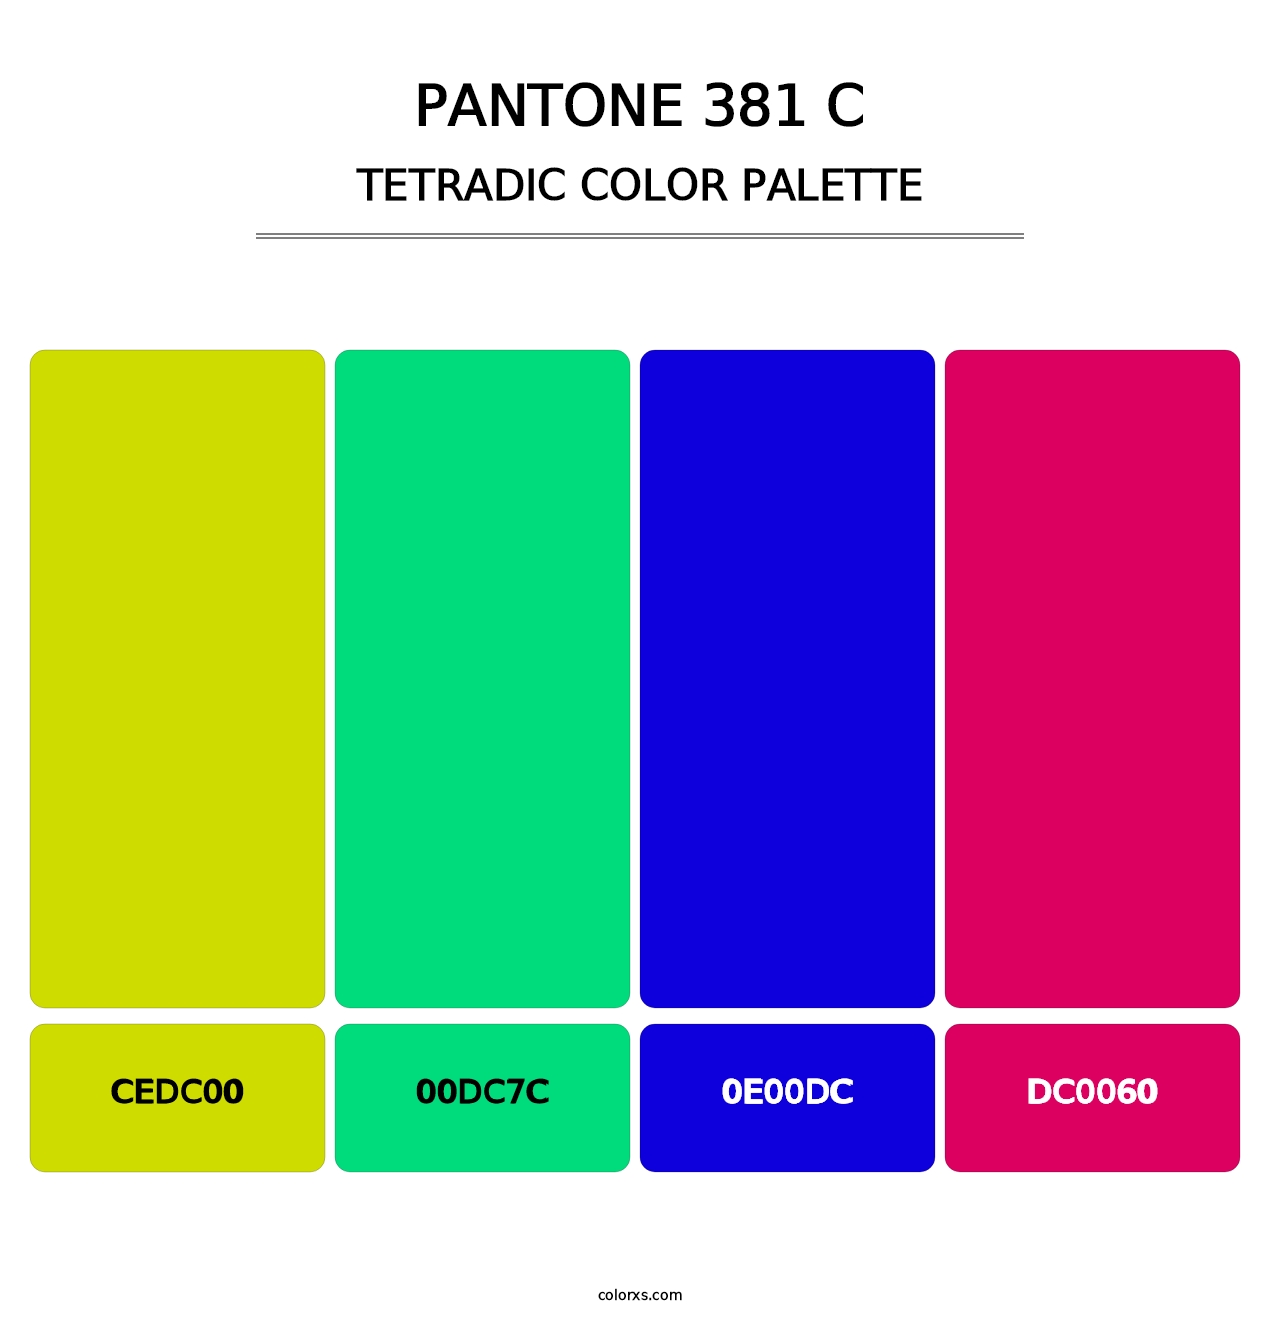 PANTONE 381 C - Tetradic Color Palette